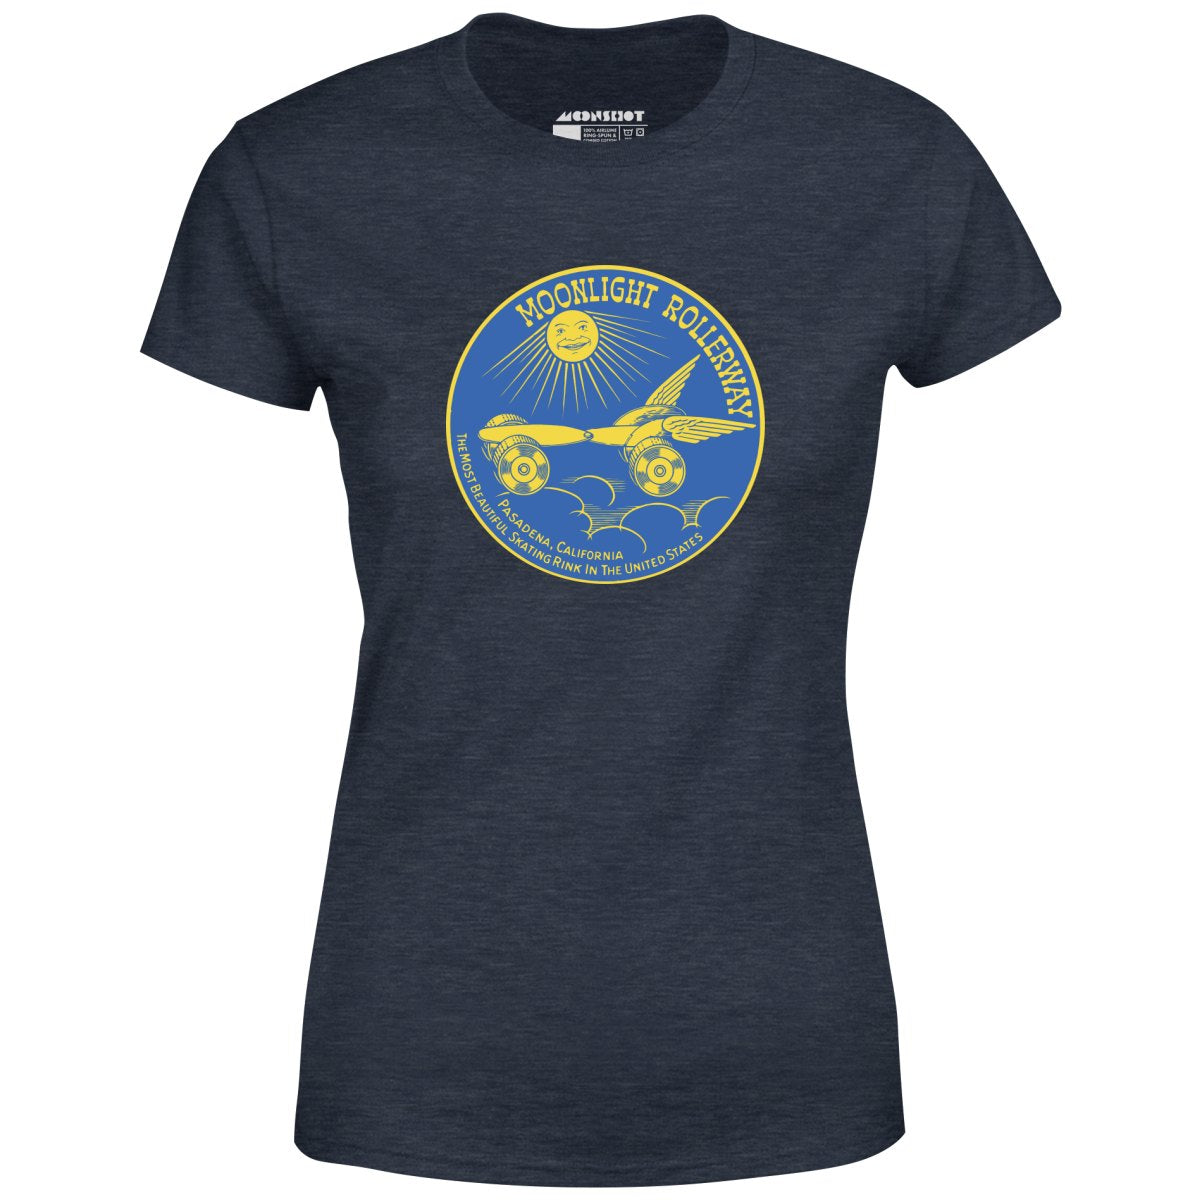 Moonlight Rollerway - Pasadena, CA - Vintage Roller Rink - Women's T-Shirt